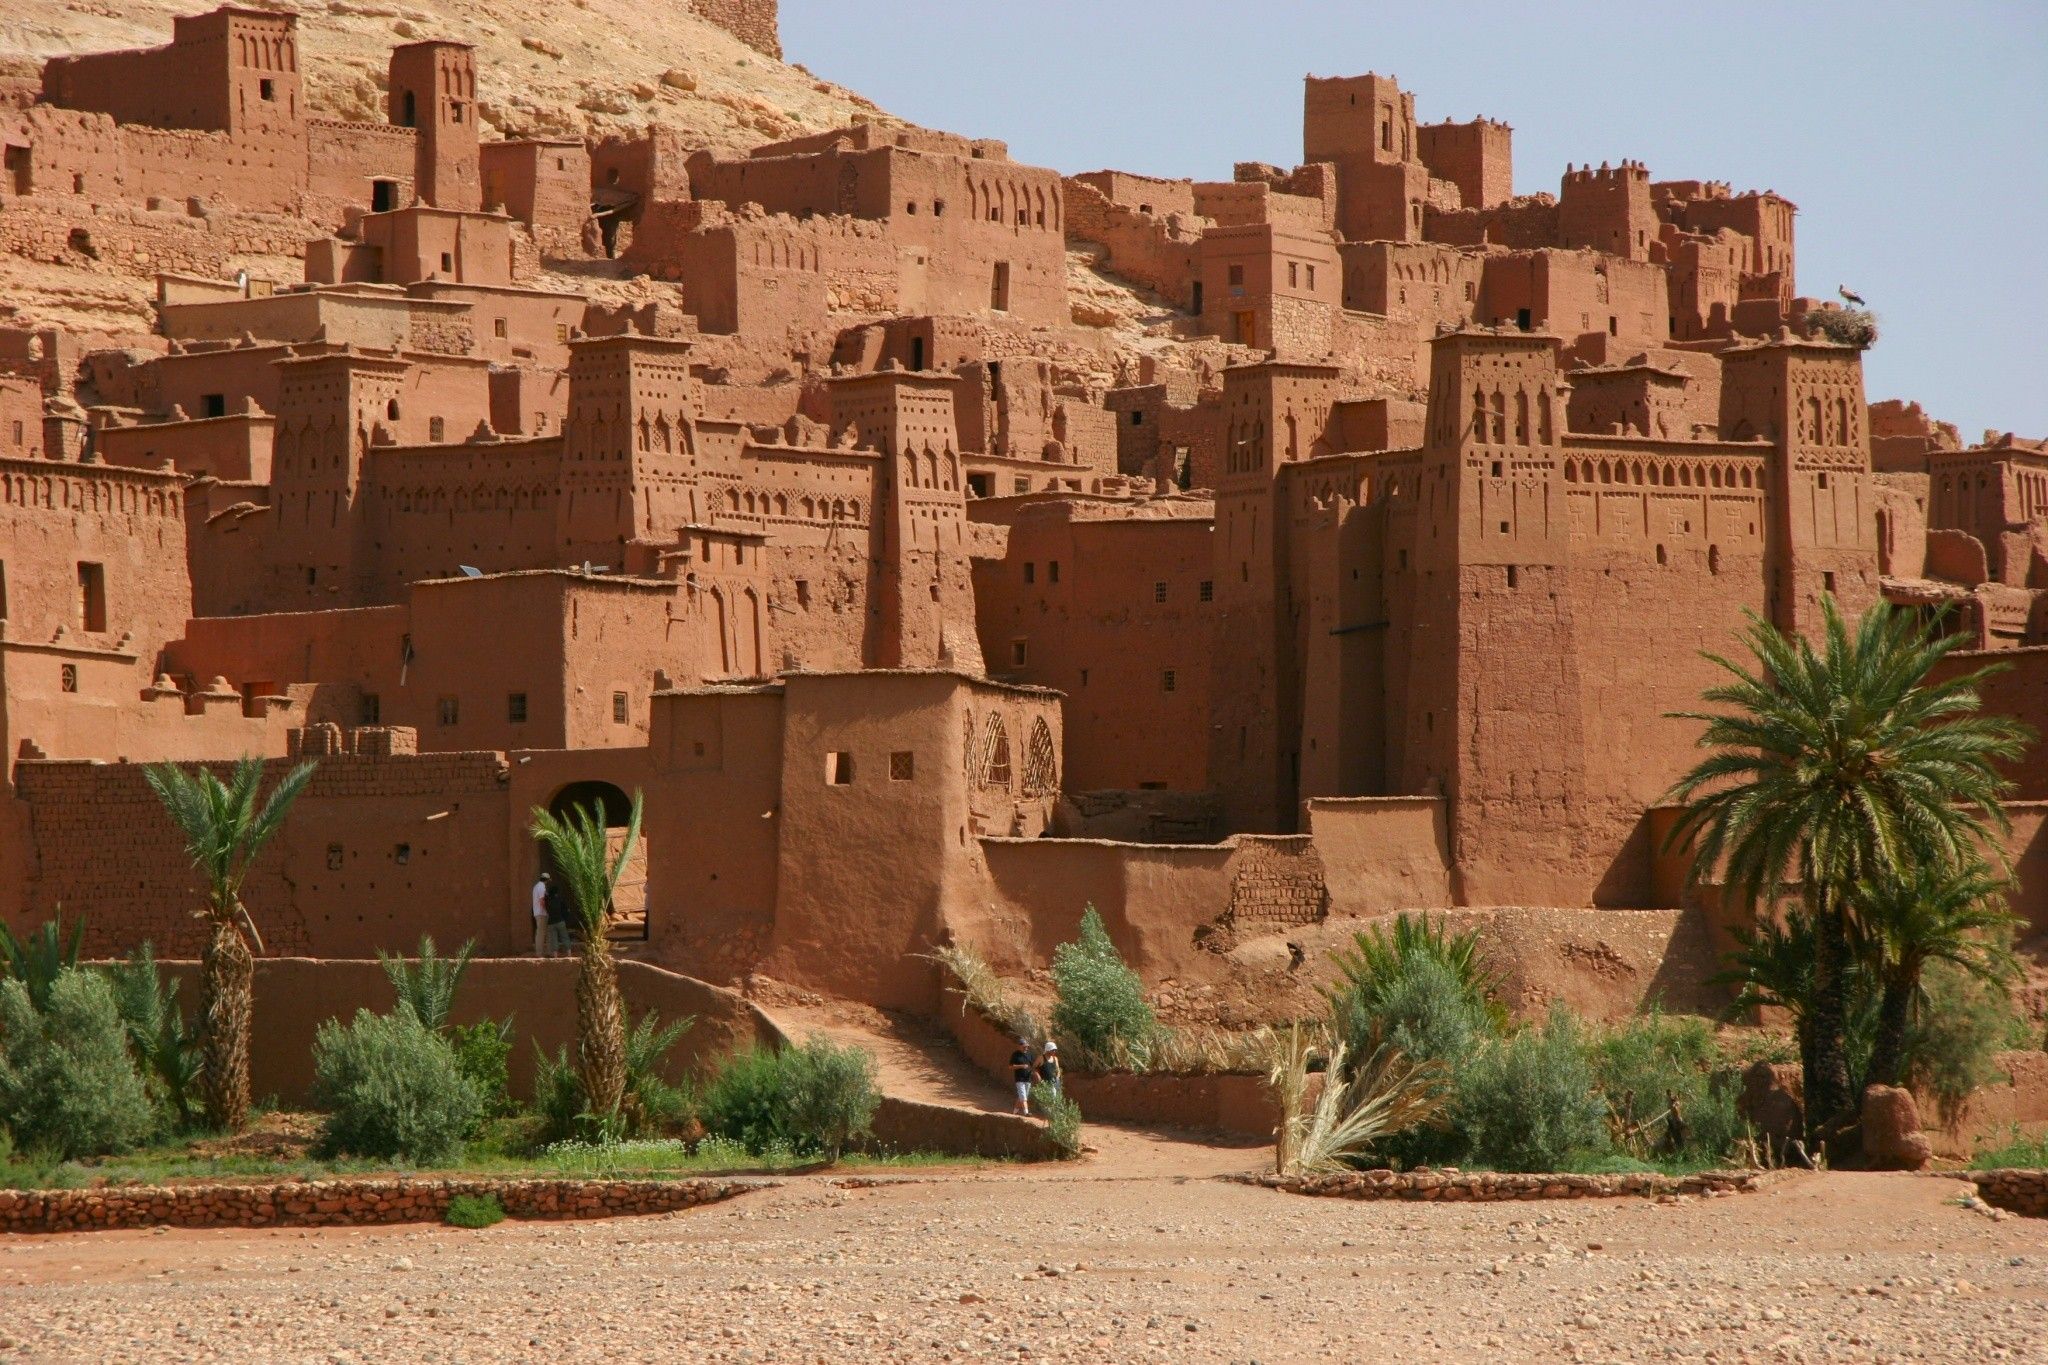 day trip to ait benhaddou from marrakech - typiquetours